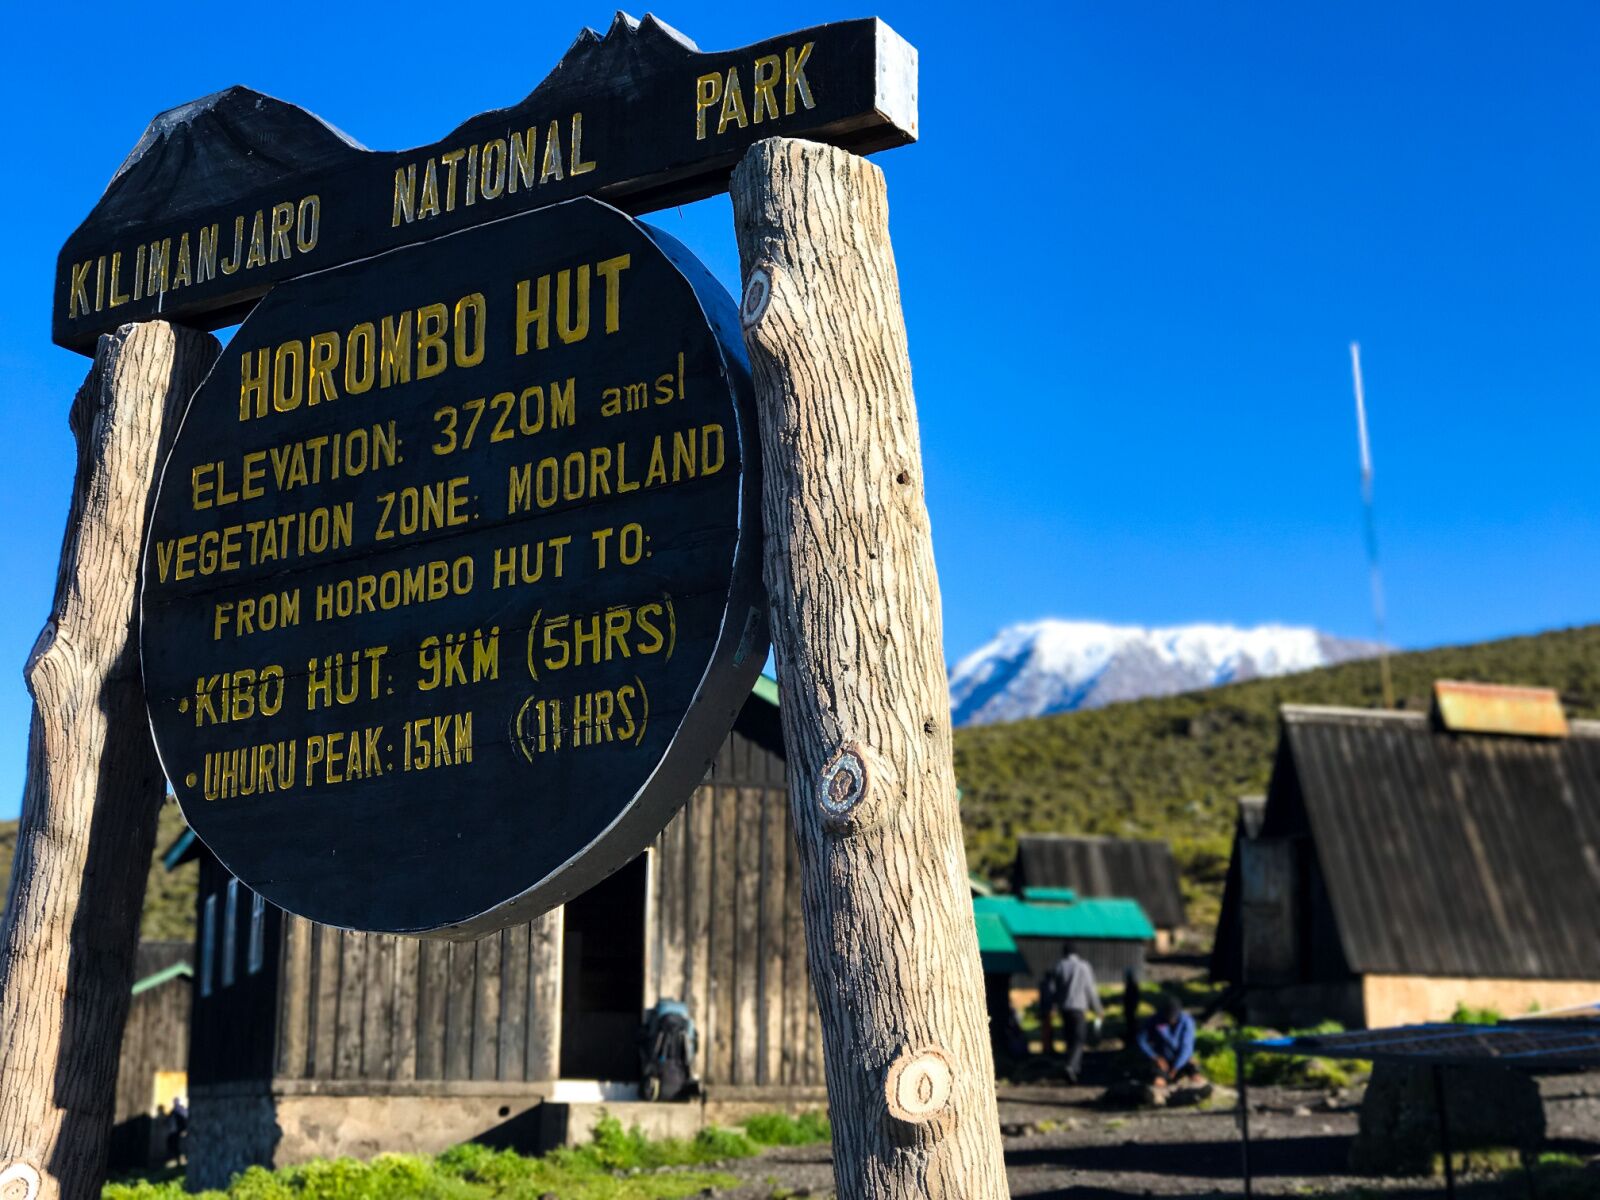 Mount kilamanjaro wifi - lodging huts